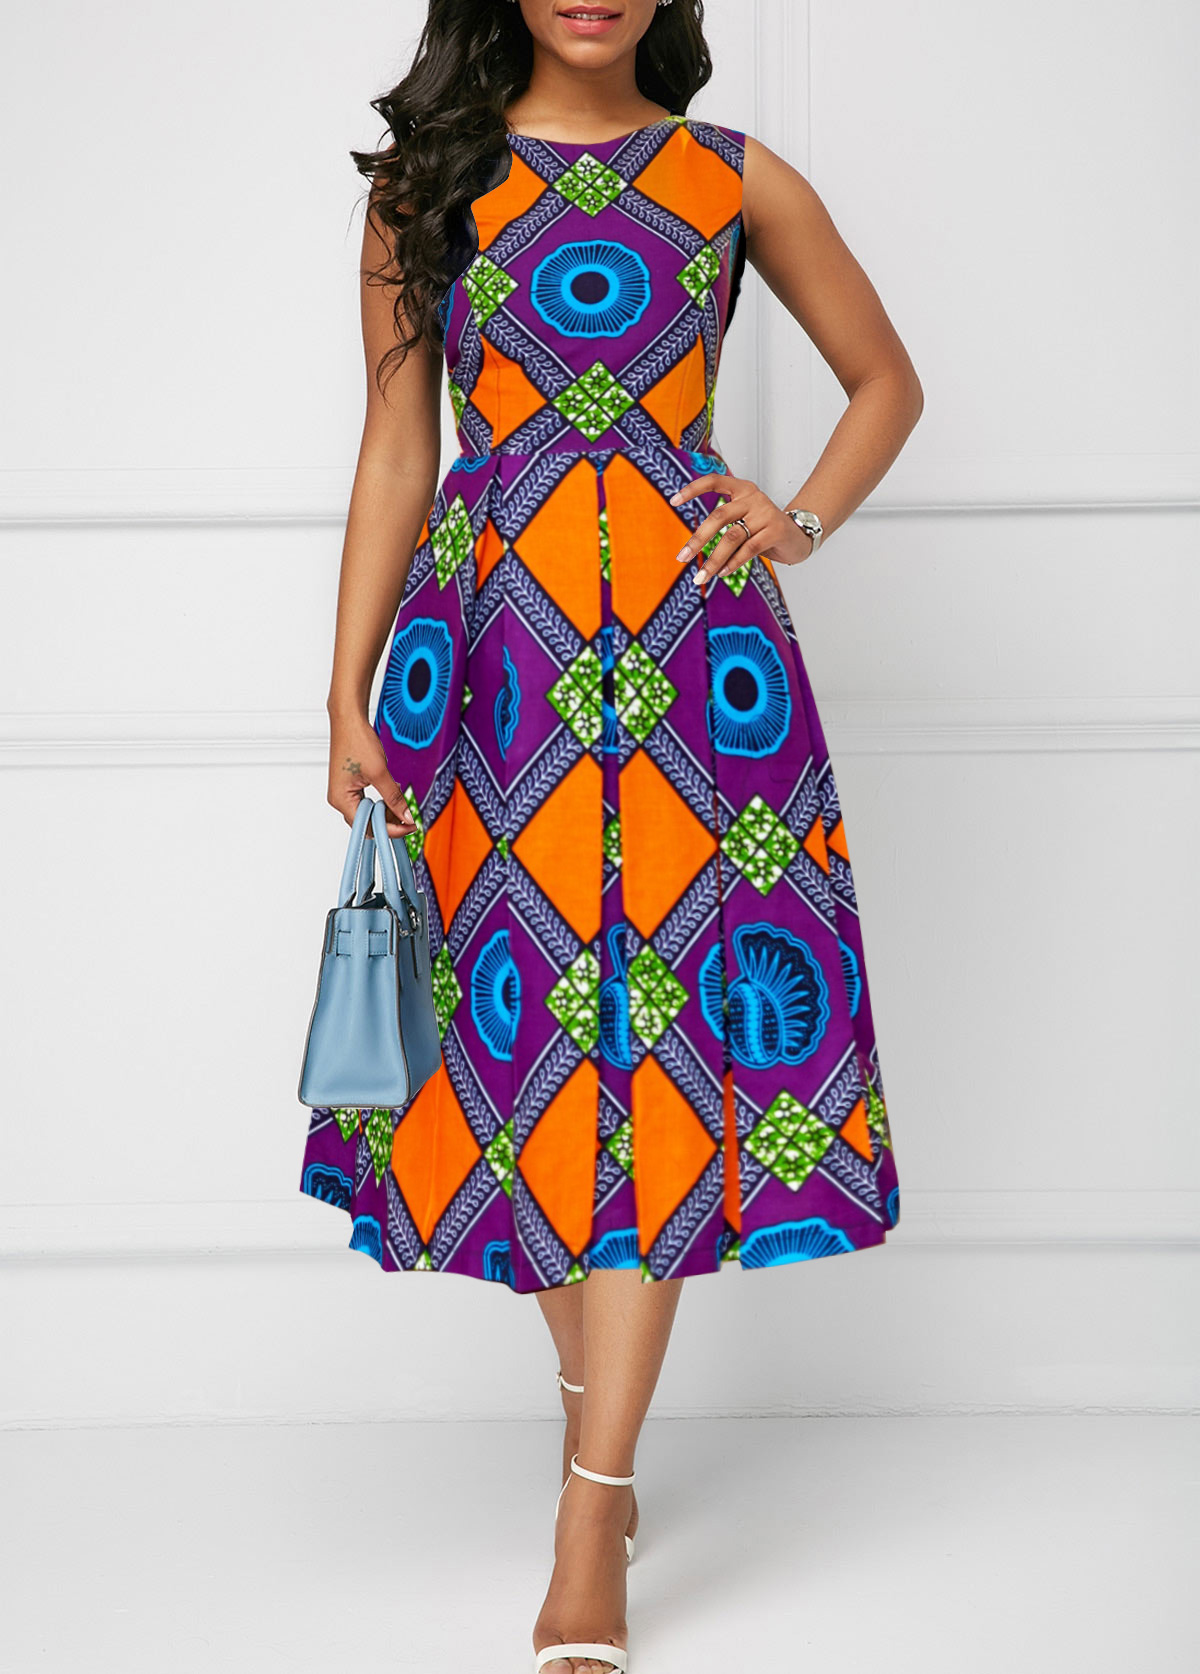 ROTITA Patchwork Tribal Print Multi Color Round Neck Sleeveless Dress